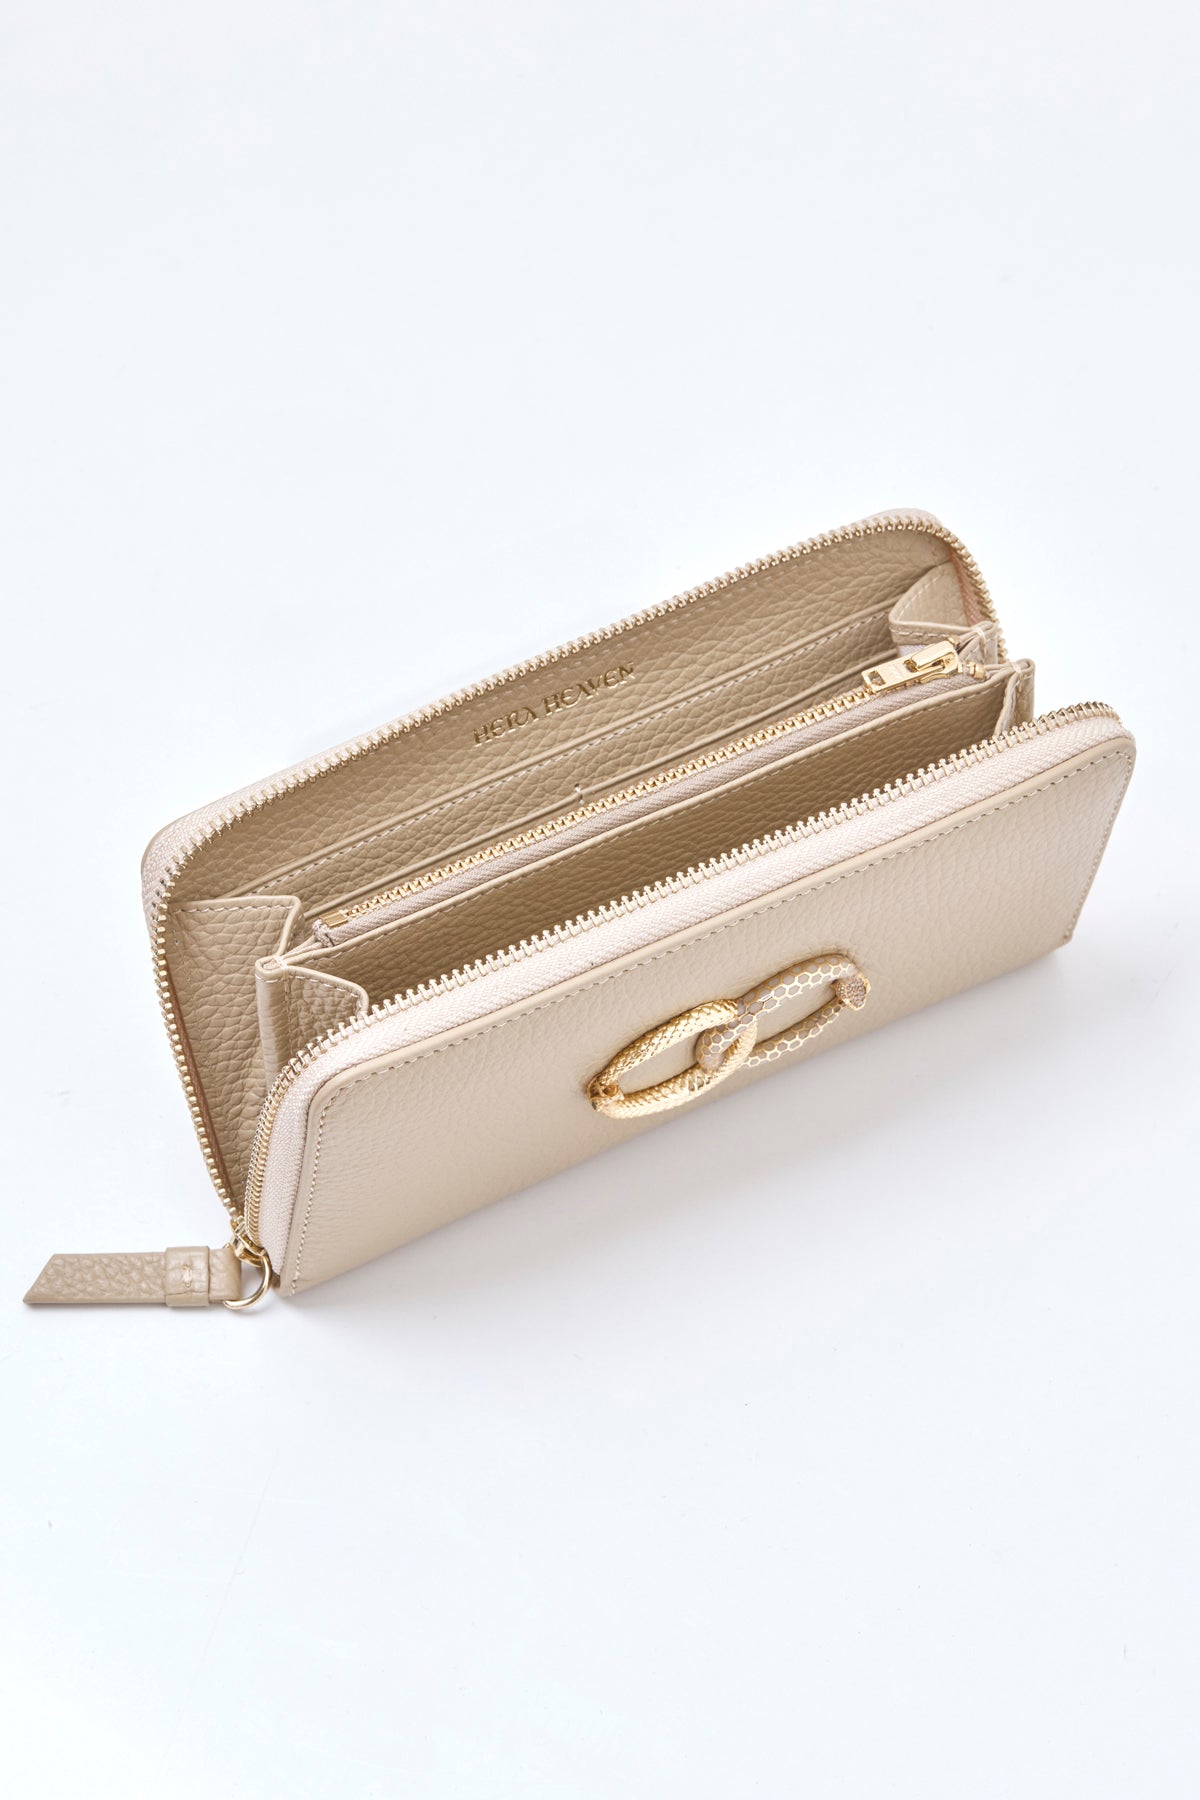 beige sand ouroboros genuine leather women's wallet inside